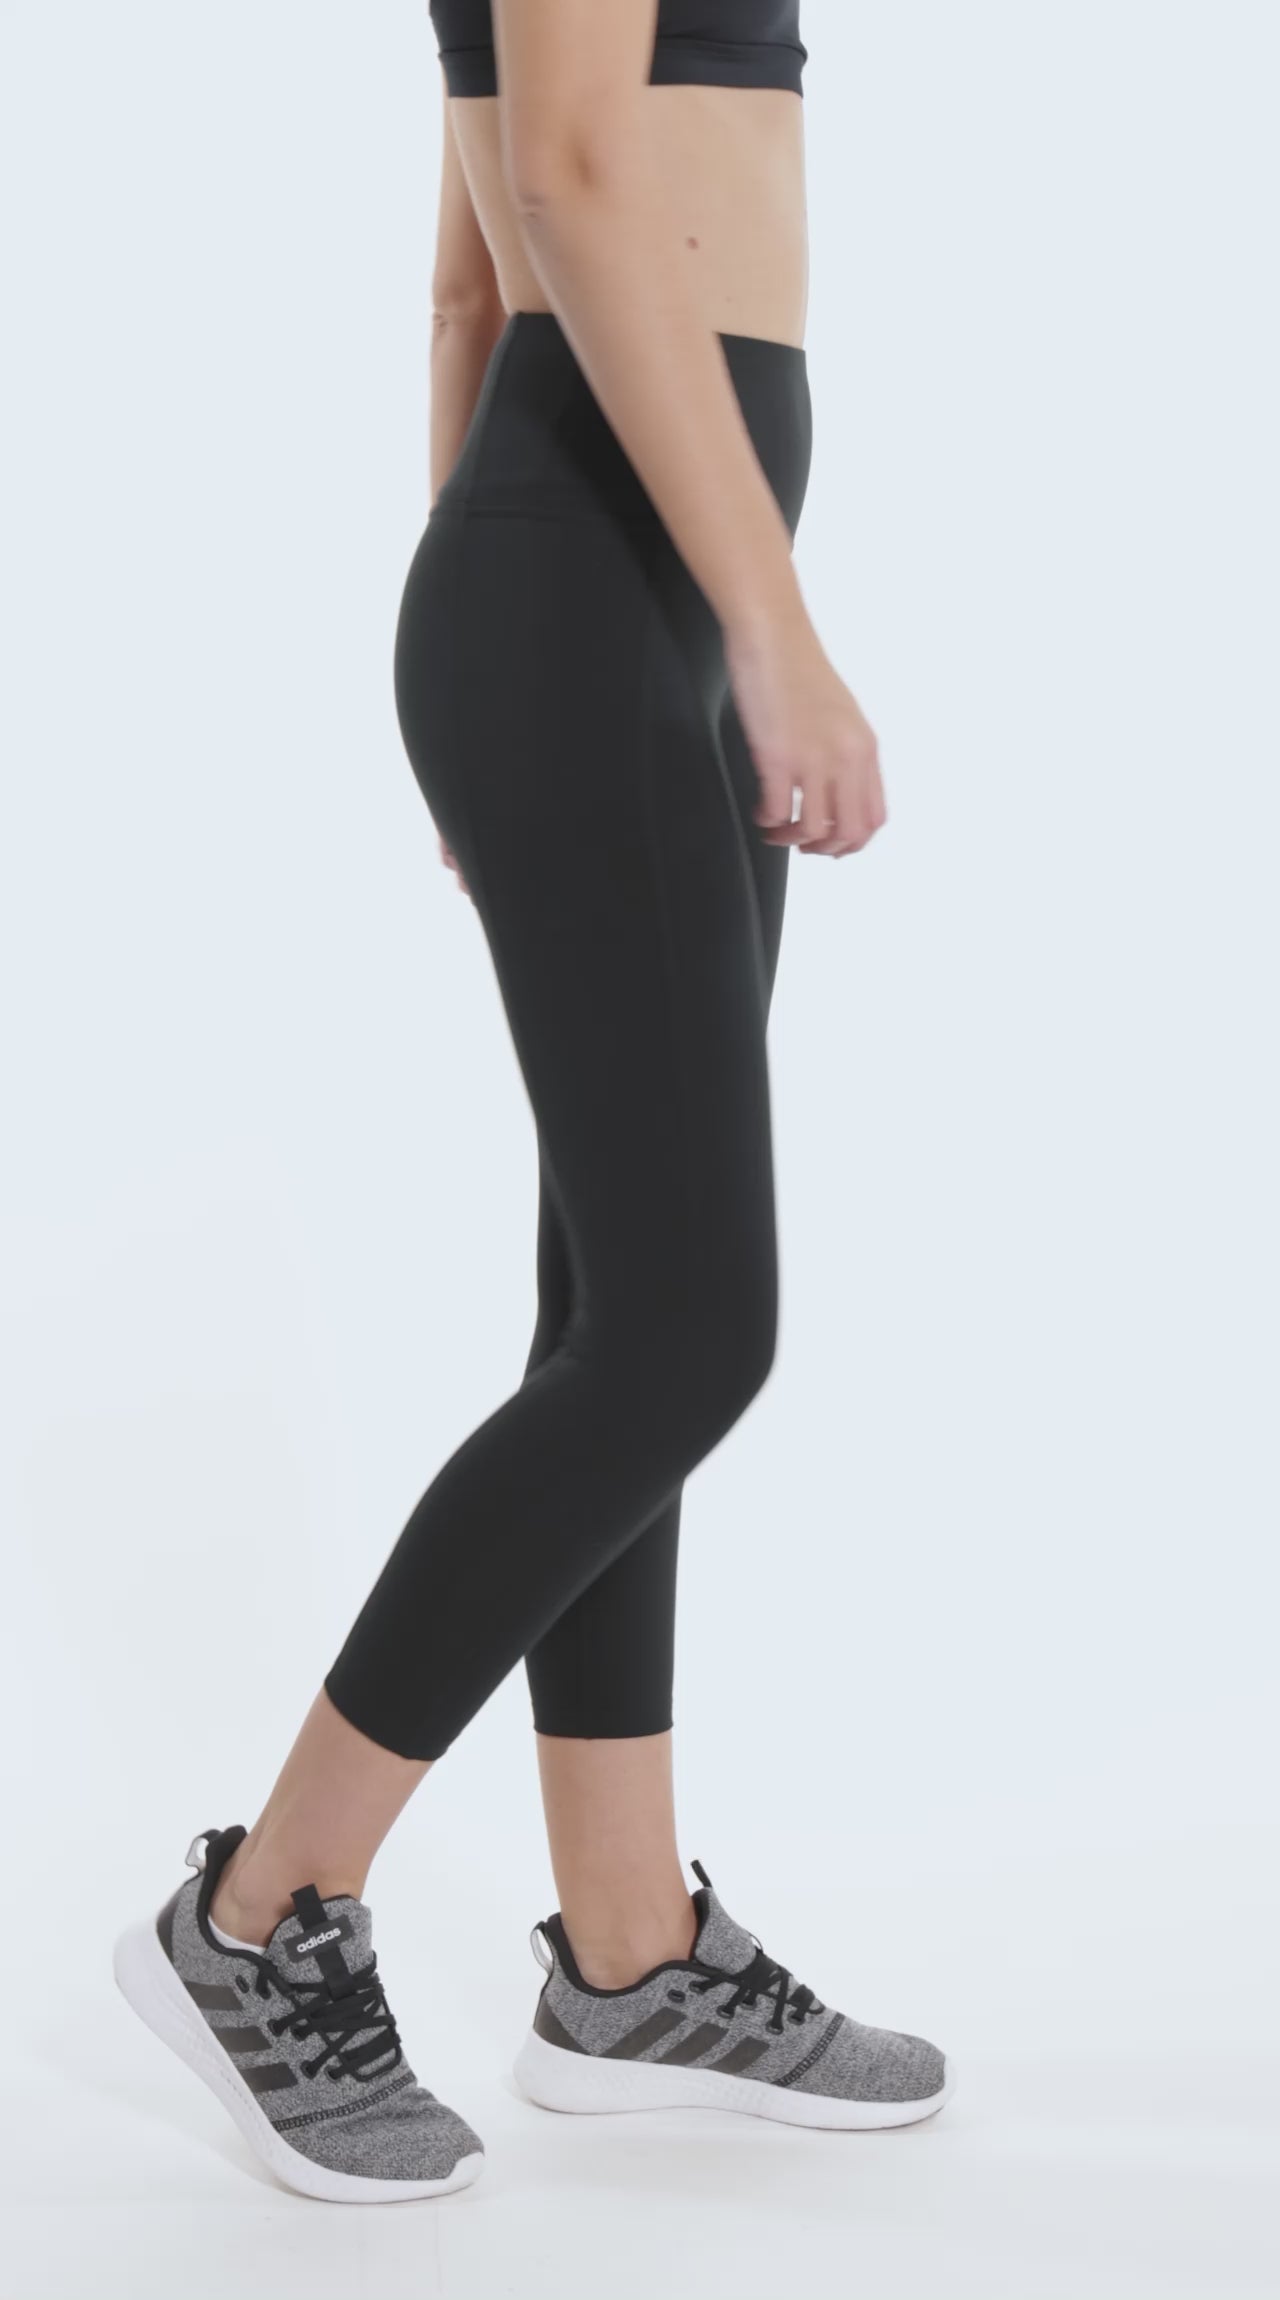 Drew Marika Women's High Waist Mid-Calf Gray Yoga Leggings Size Medium  Cropped - $22 - From sandy